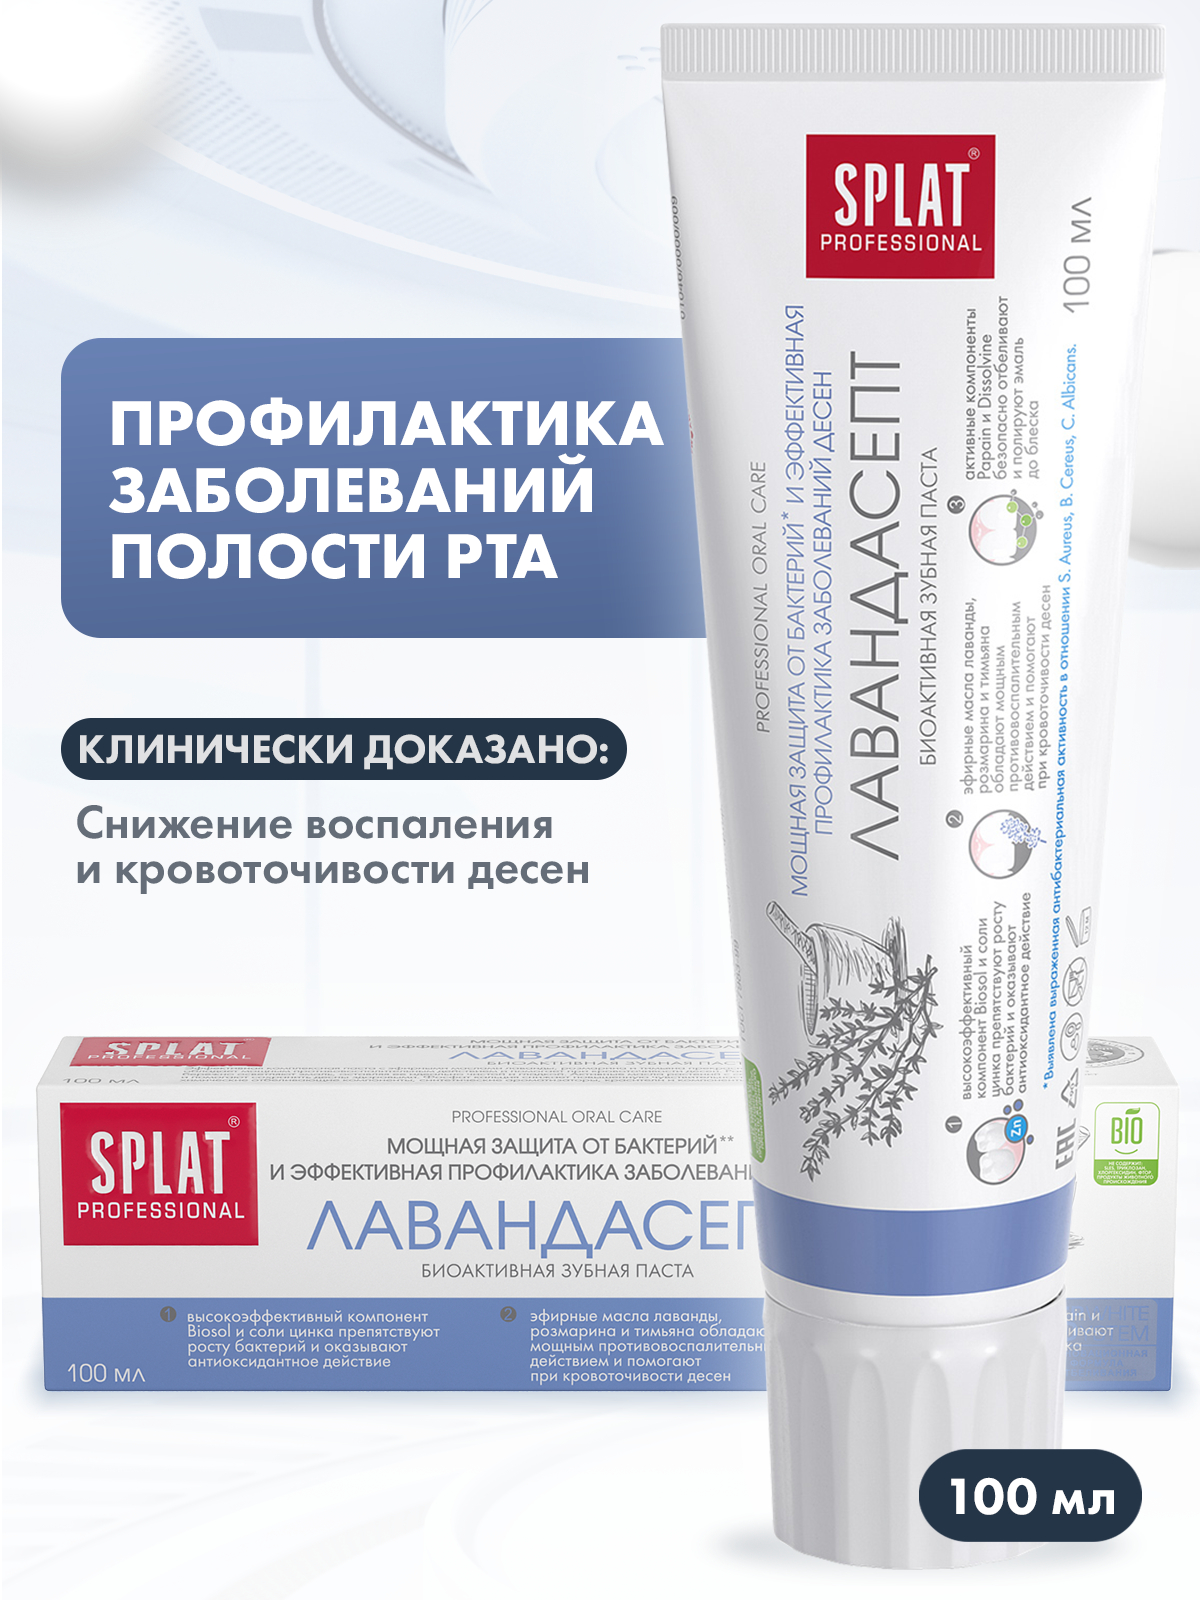 Зубная паста SPLAT Professional Лавандасепт 100 мл зубная паста splat special extreme white 75 мл